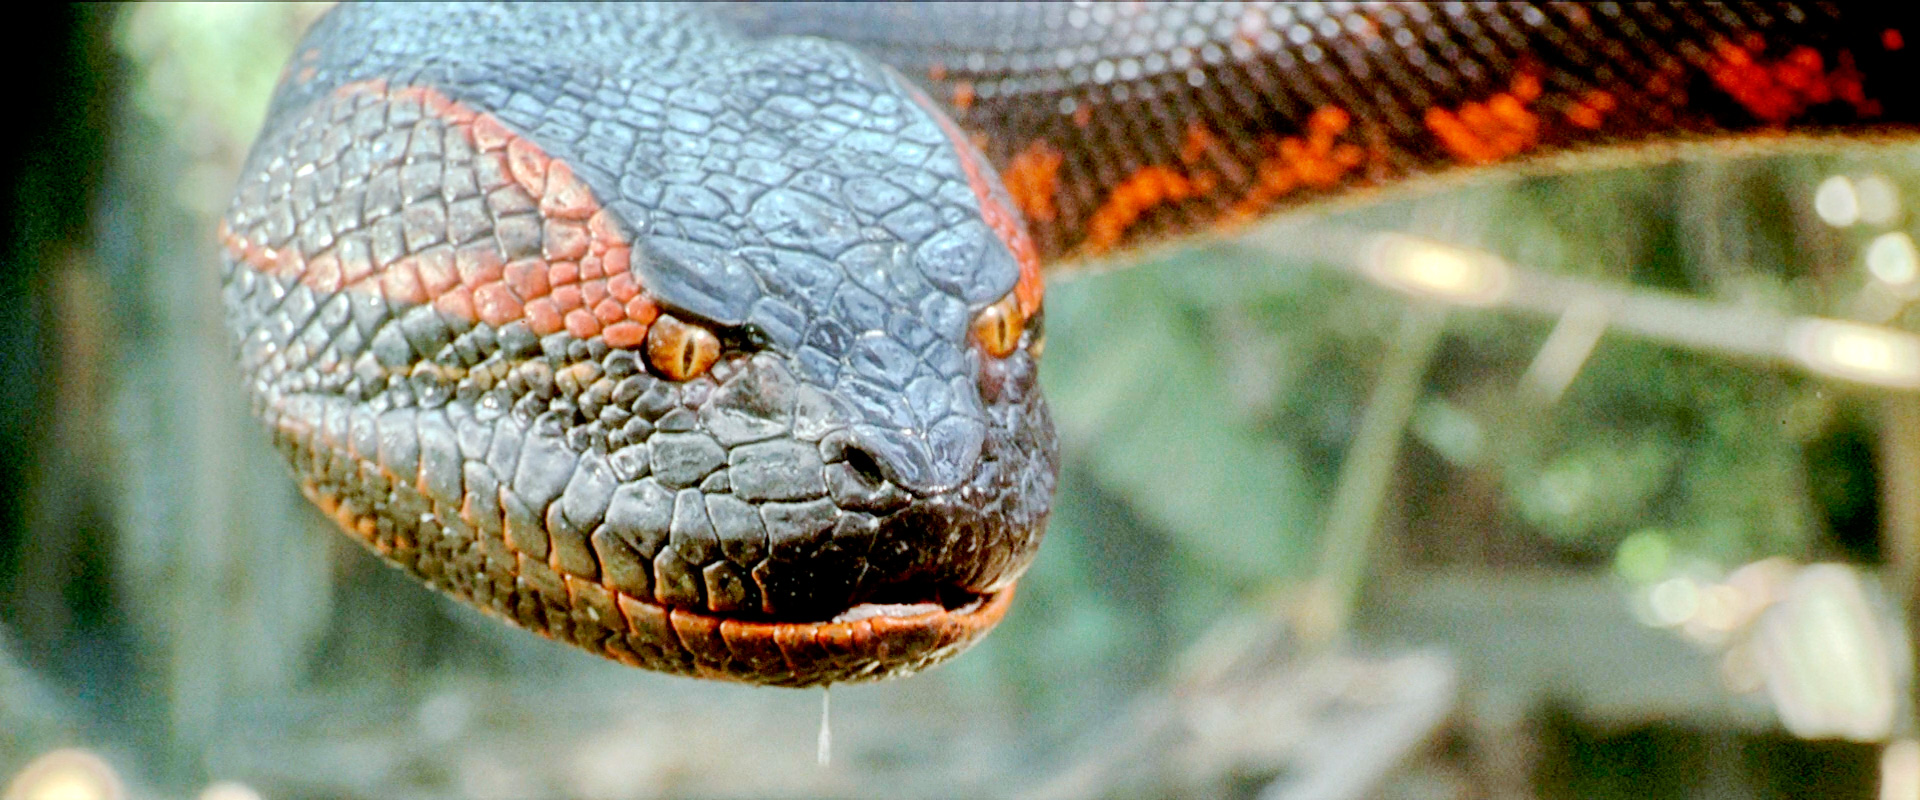 Голова гигантской змеи